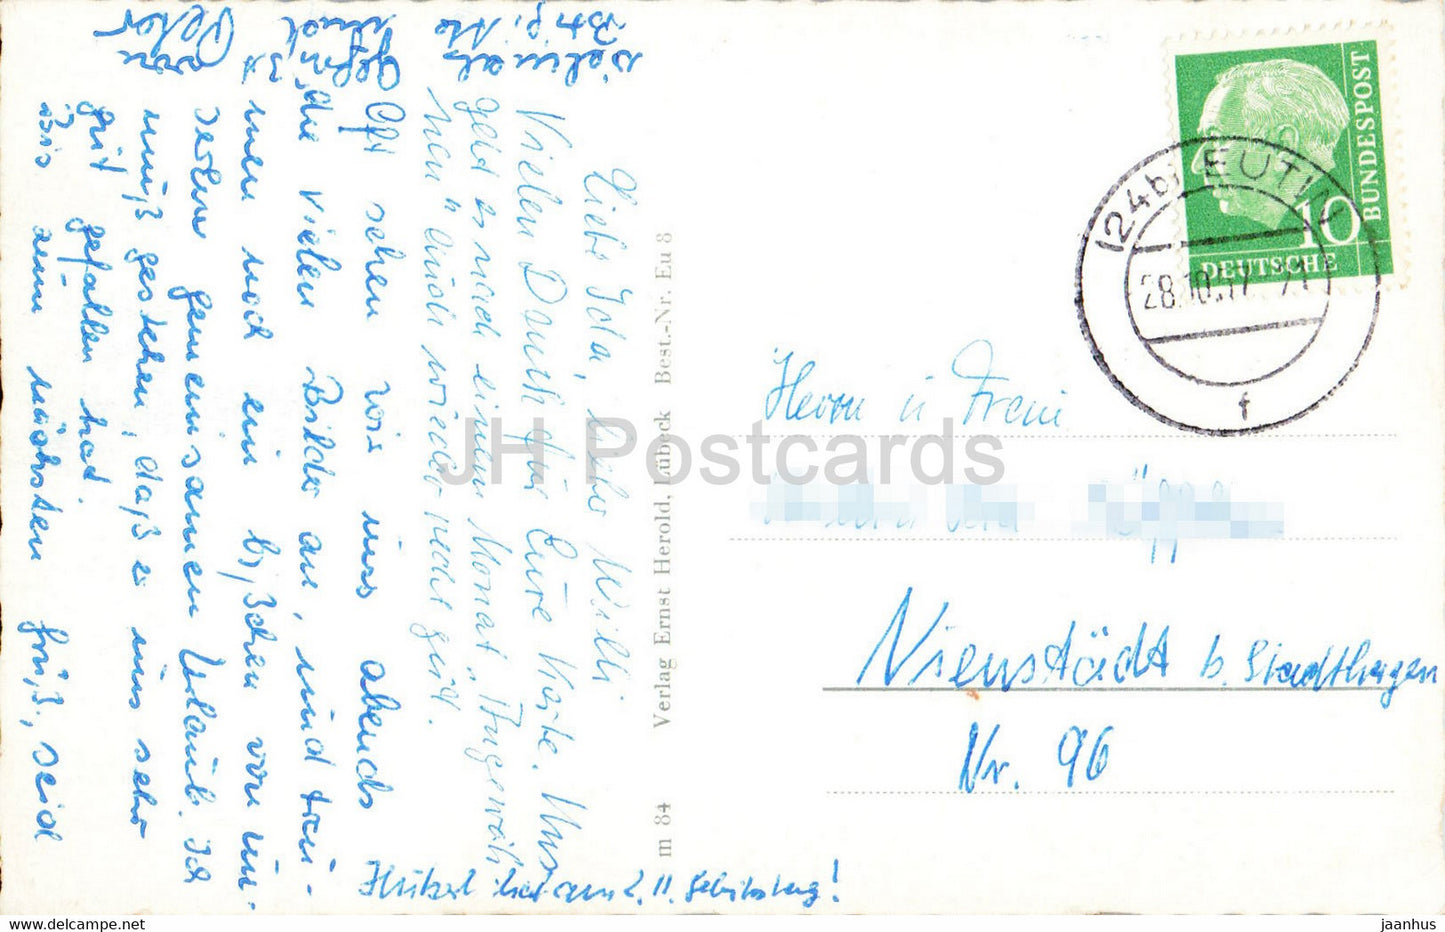 Gruss aus Eutin - Schloss - Markt - Rosengarten - old postcard - 1957 - Germany - used